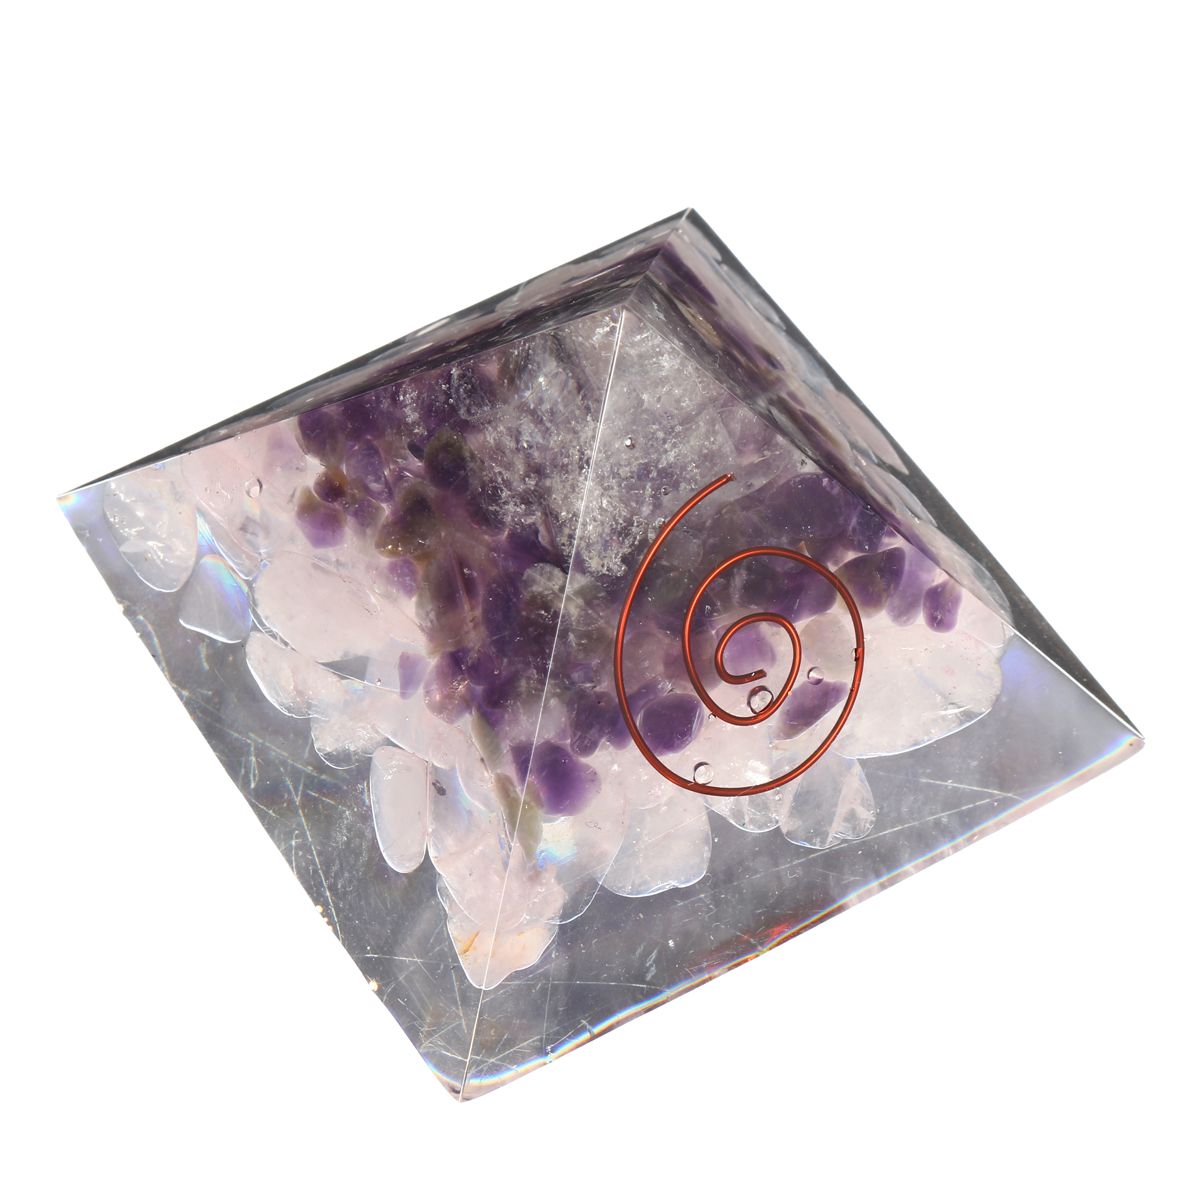 Pyramid-Crystals-Gemstone-Meditation-Yoga-Energy-Healing-Stone-Home-Decoration-1537942